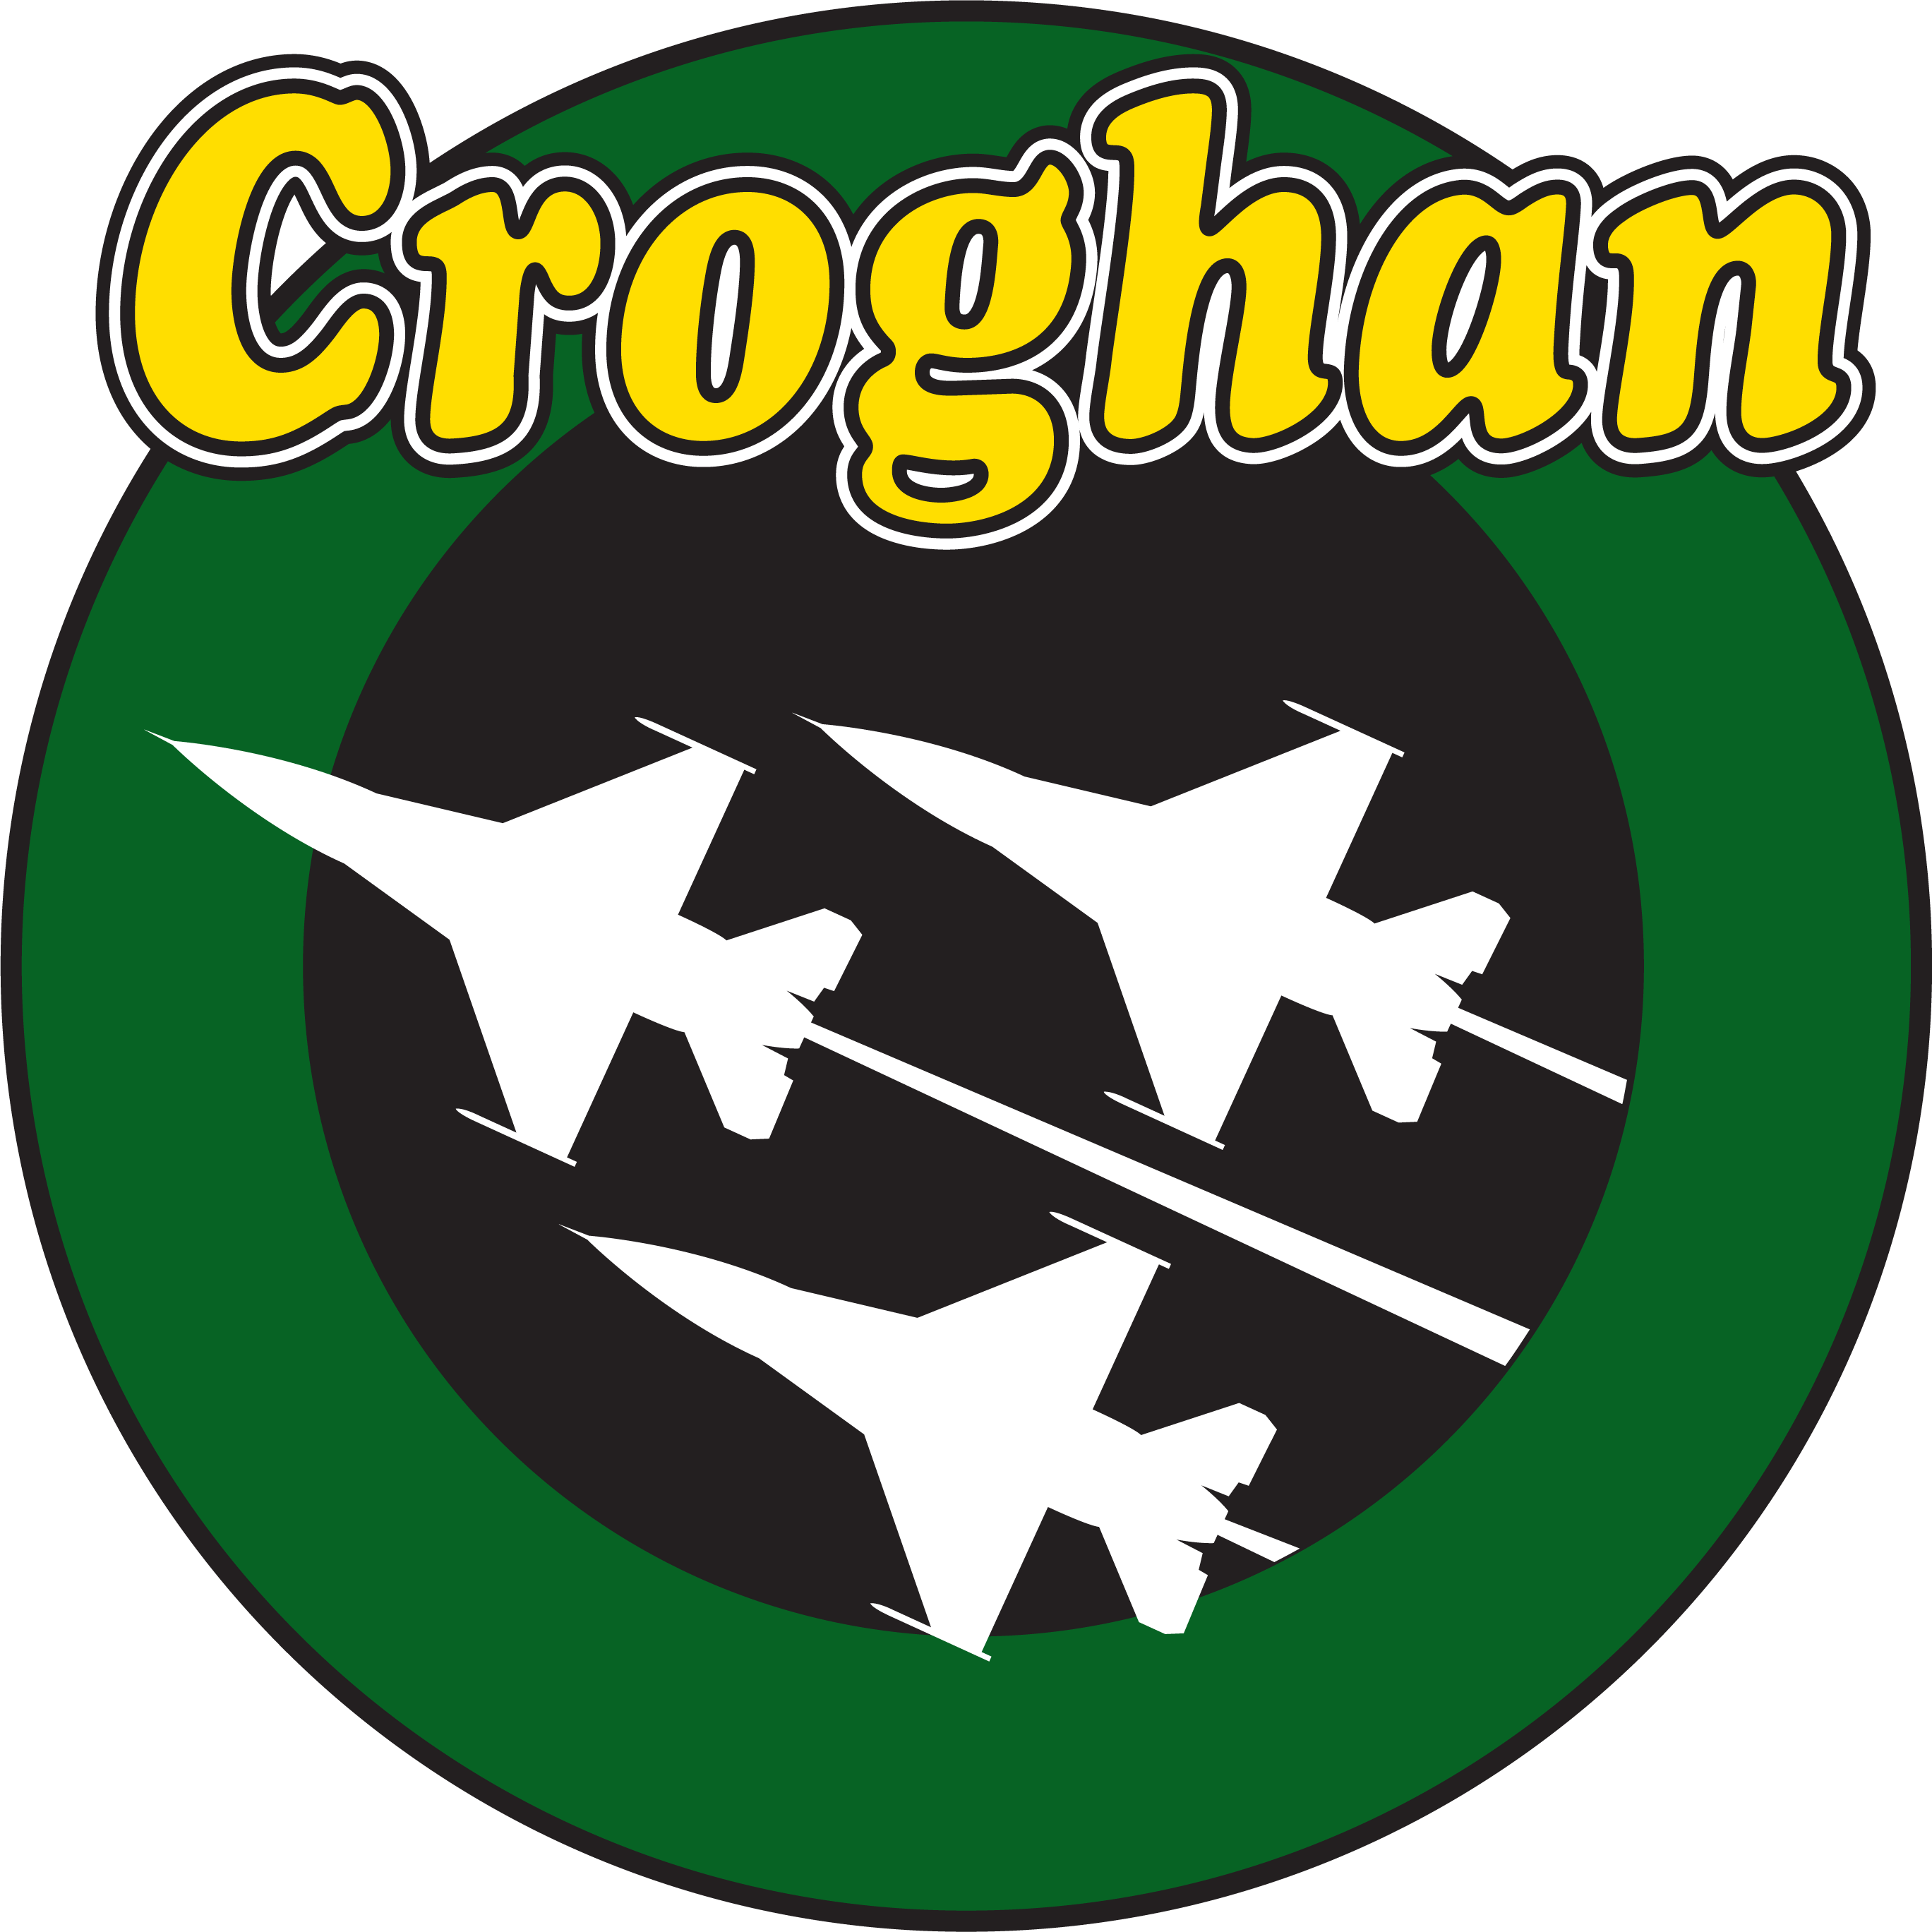 Croghan Jets Logo